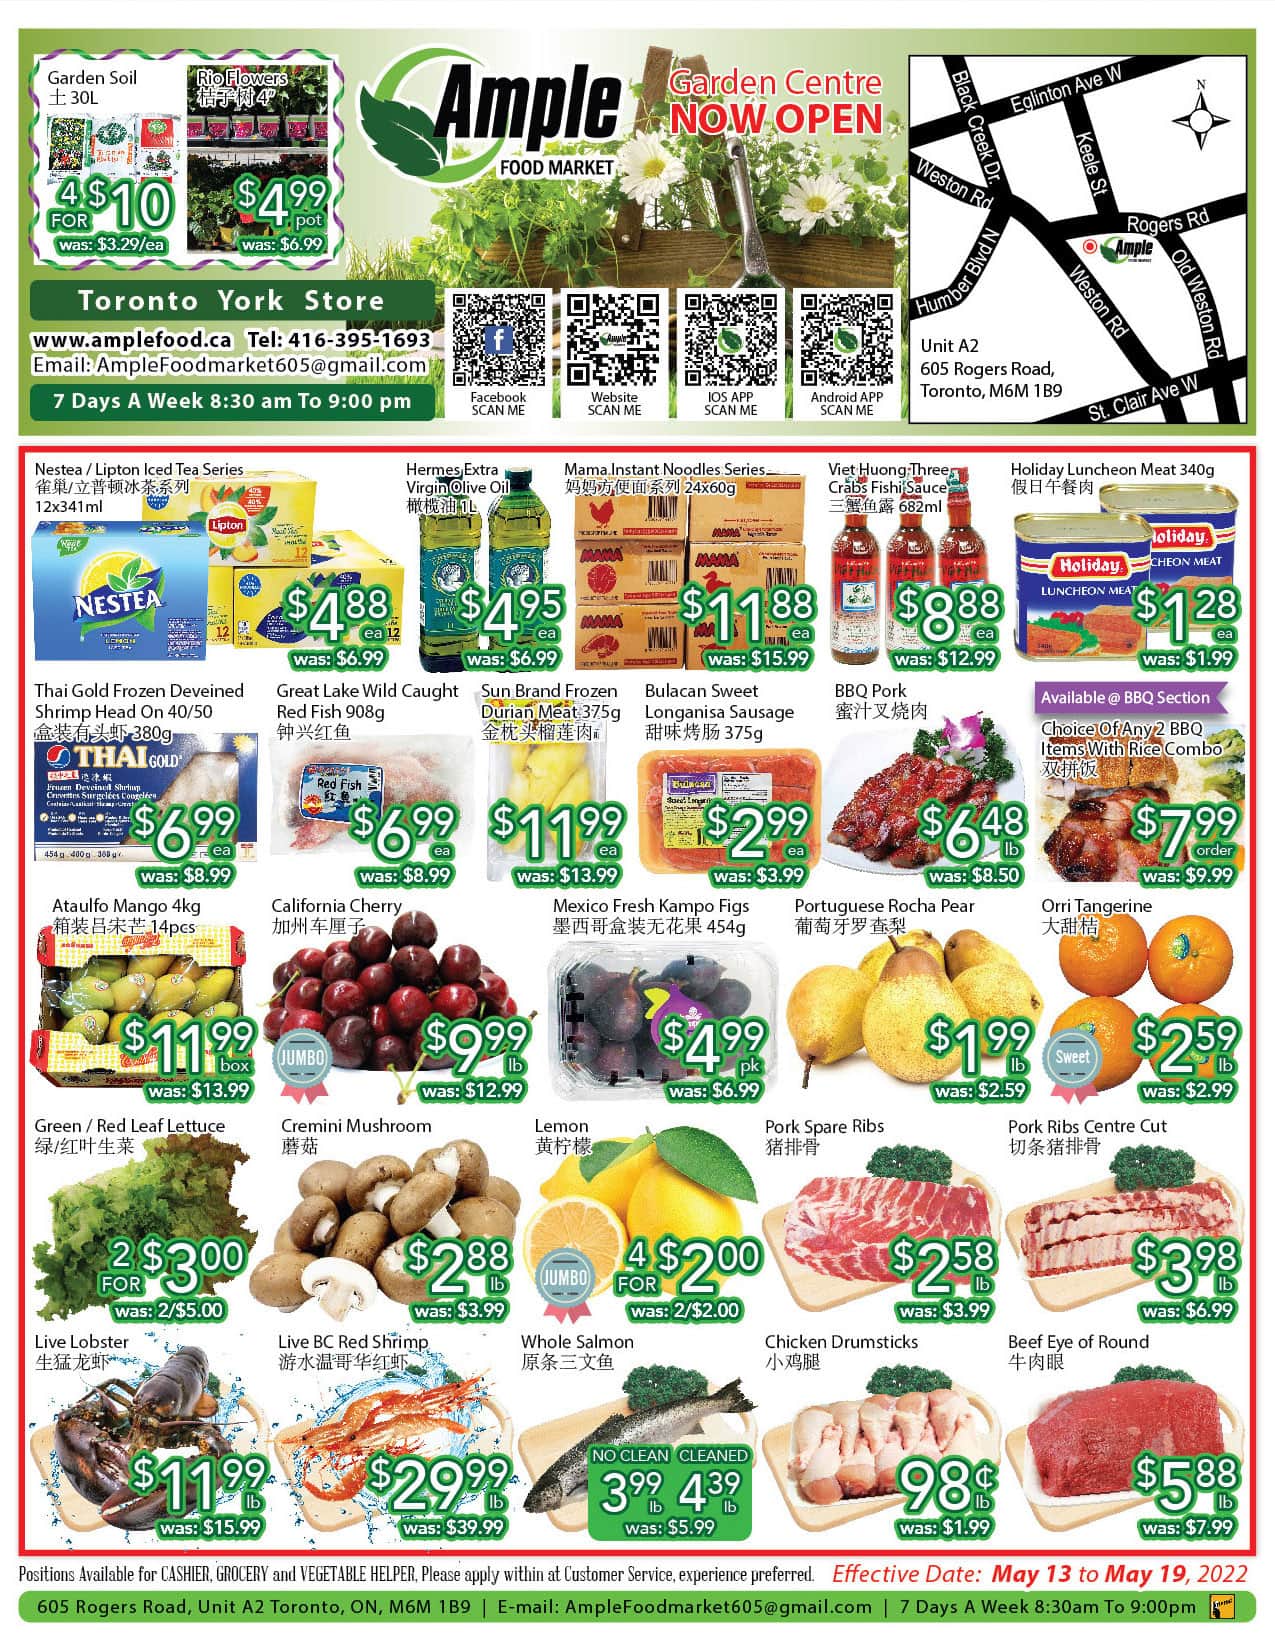 Ample Food Market Toronto York - Weekly Flyer Specials - Page 1